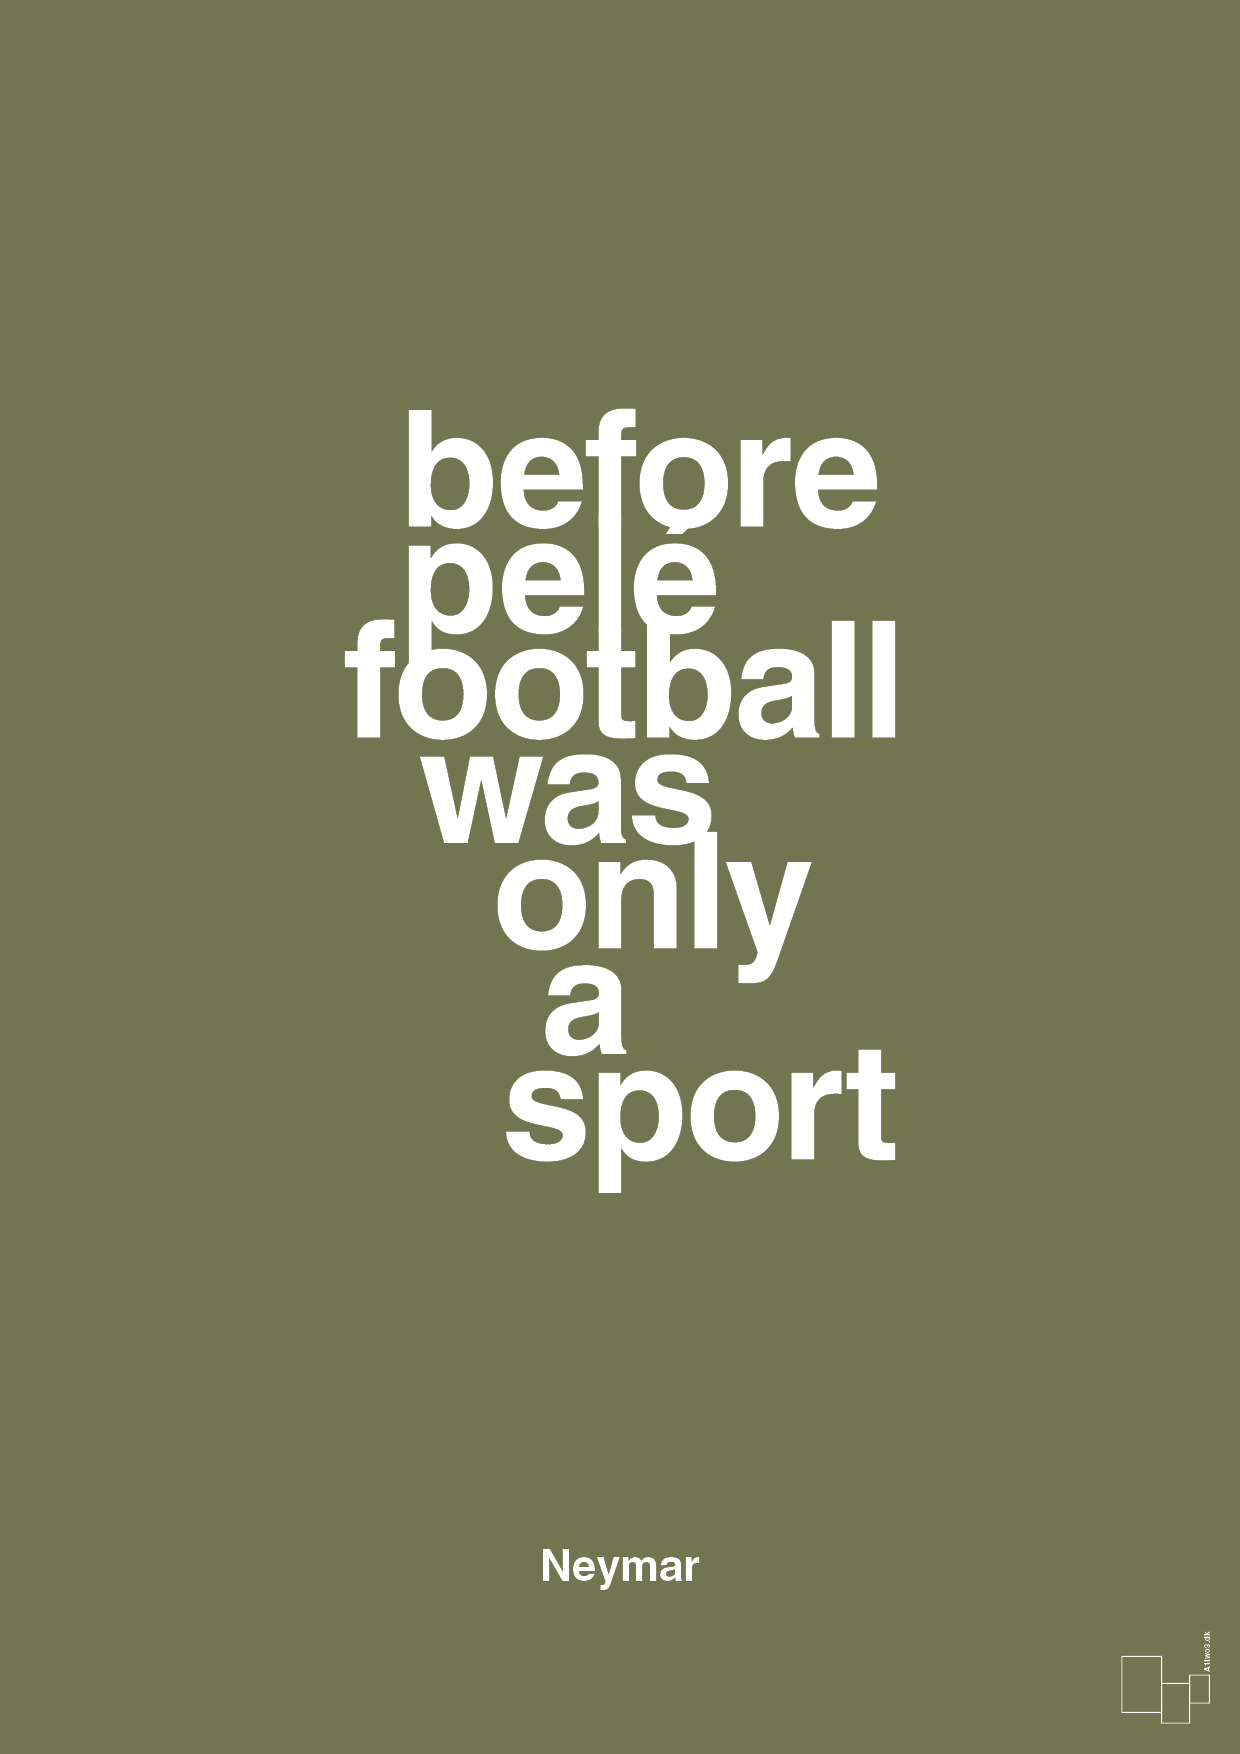 before pelé football was only a sport - Plakat med Citater i Secret Meadow